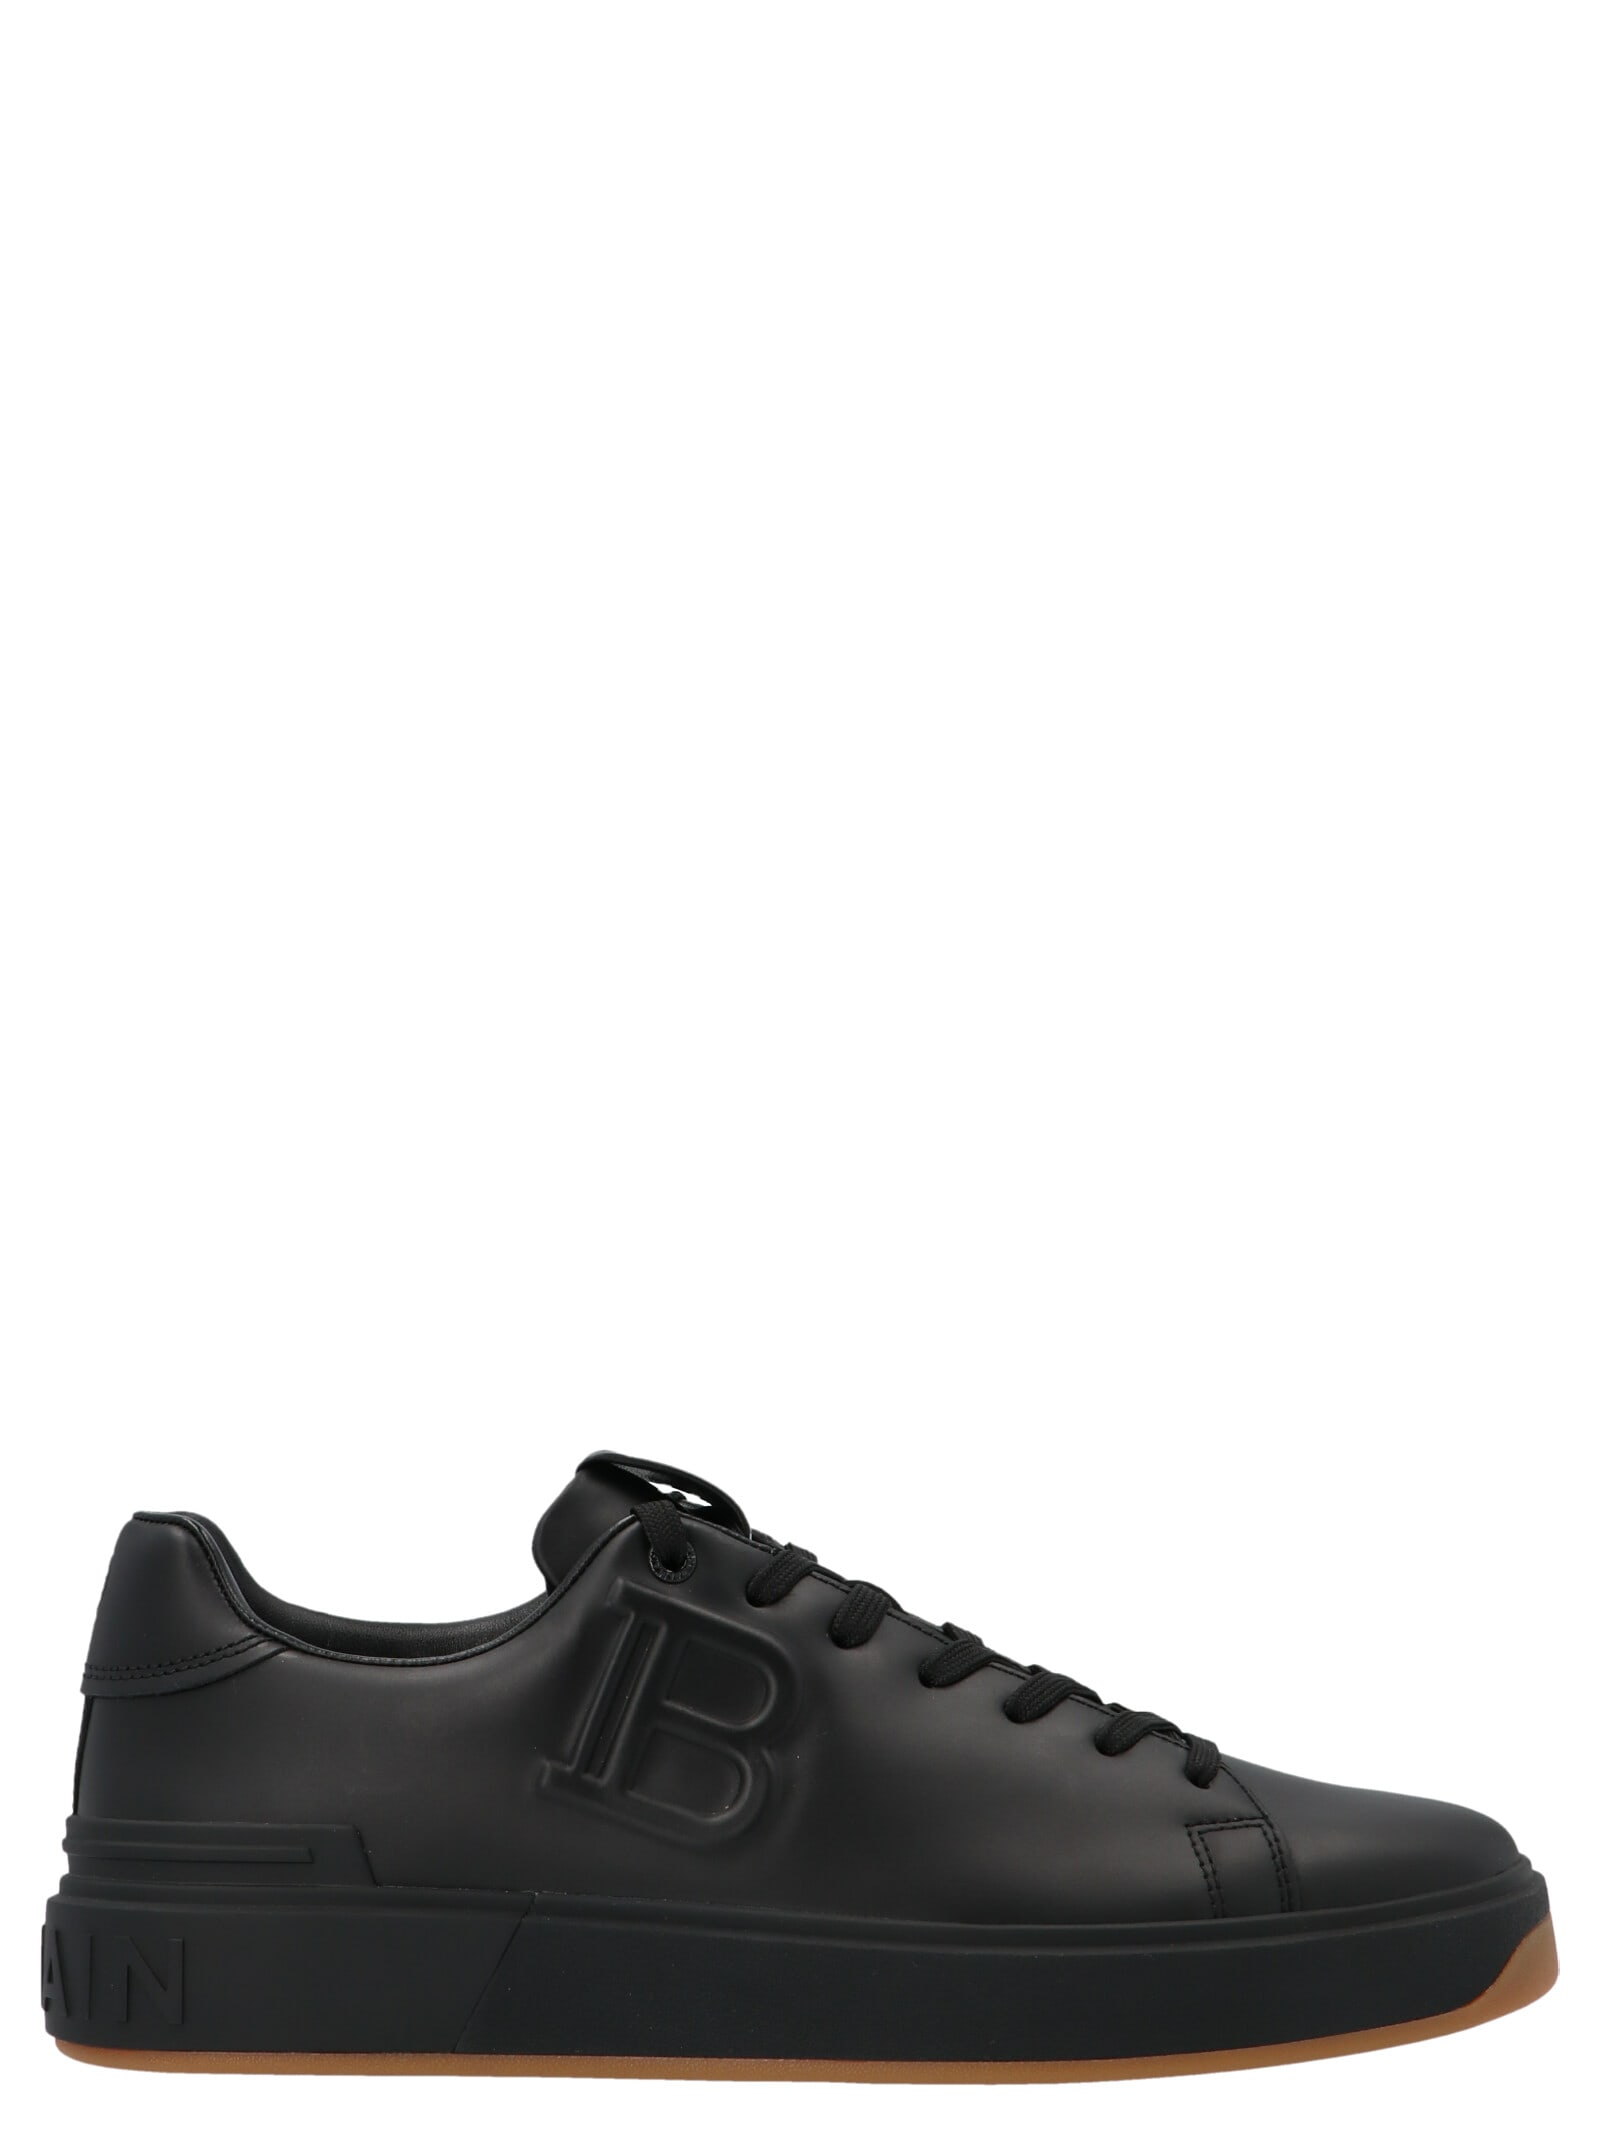 Balmain B-court Shoes In Black